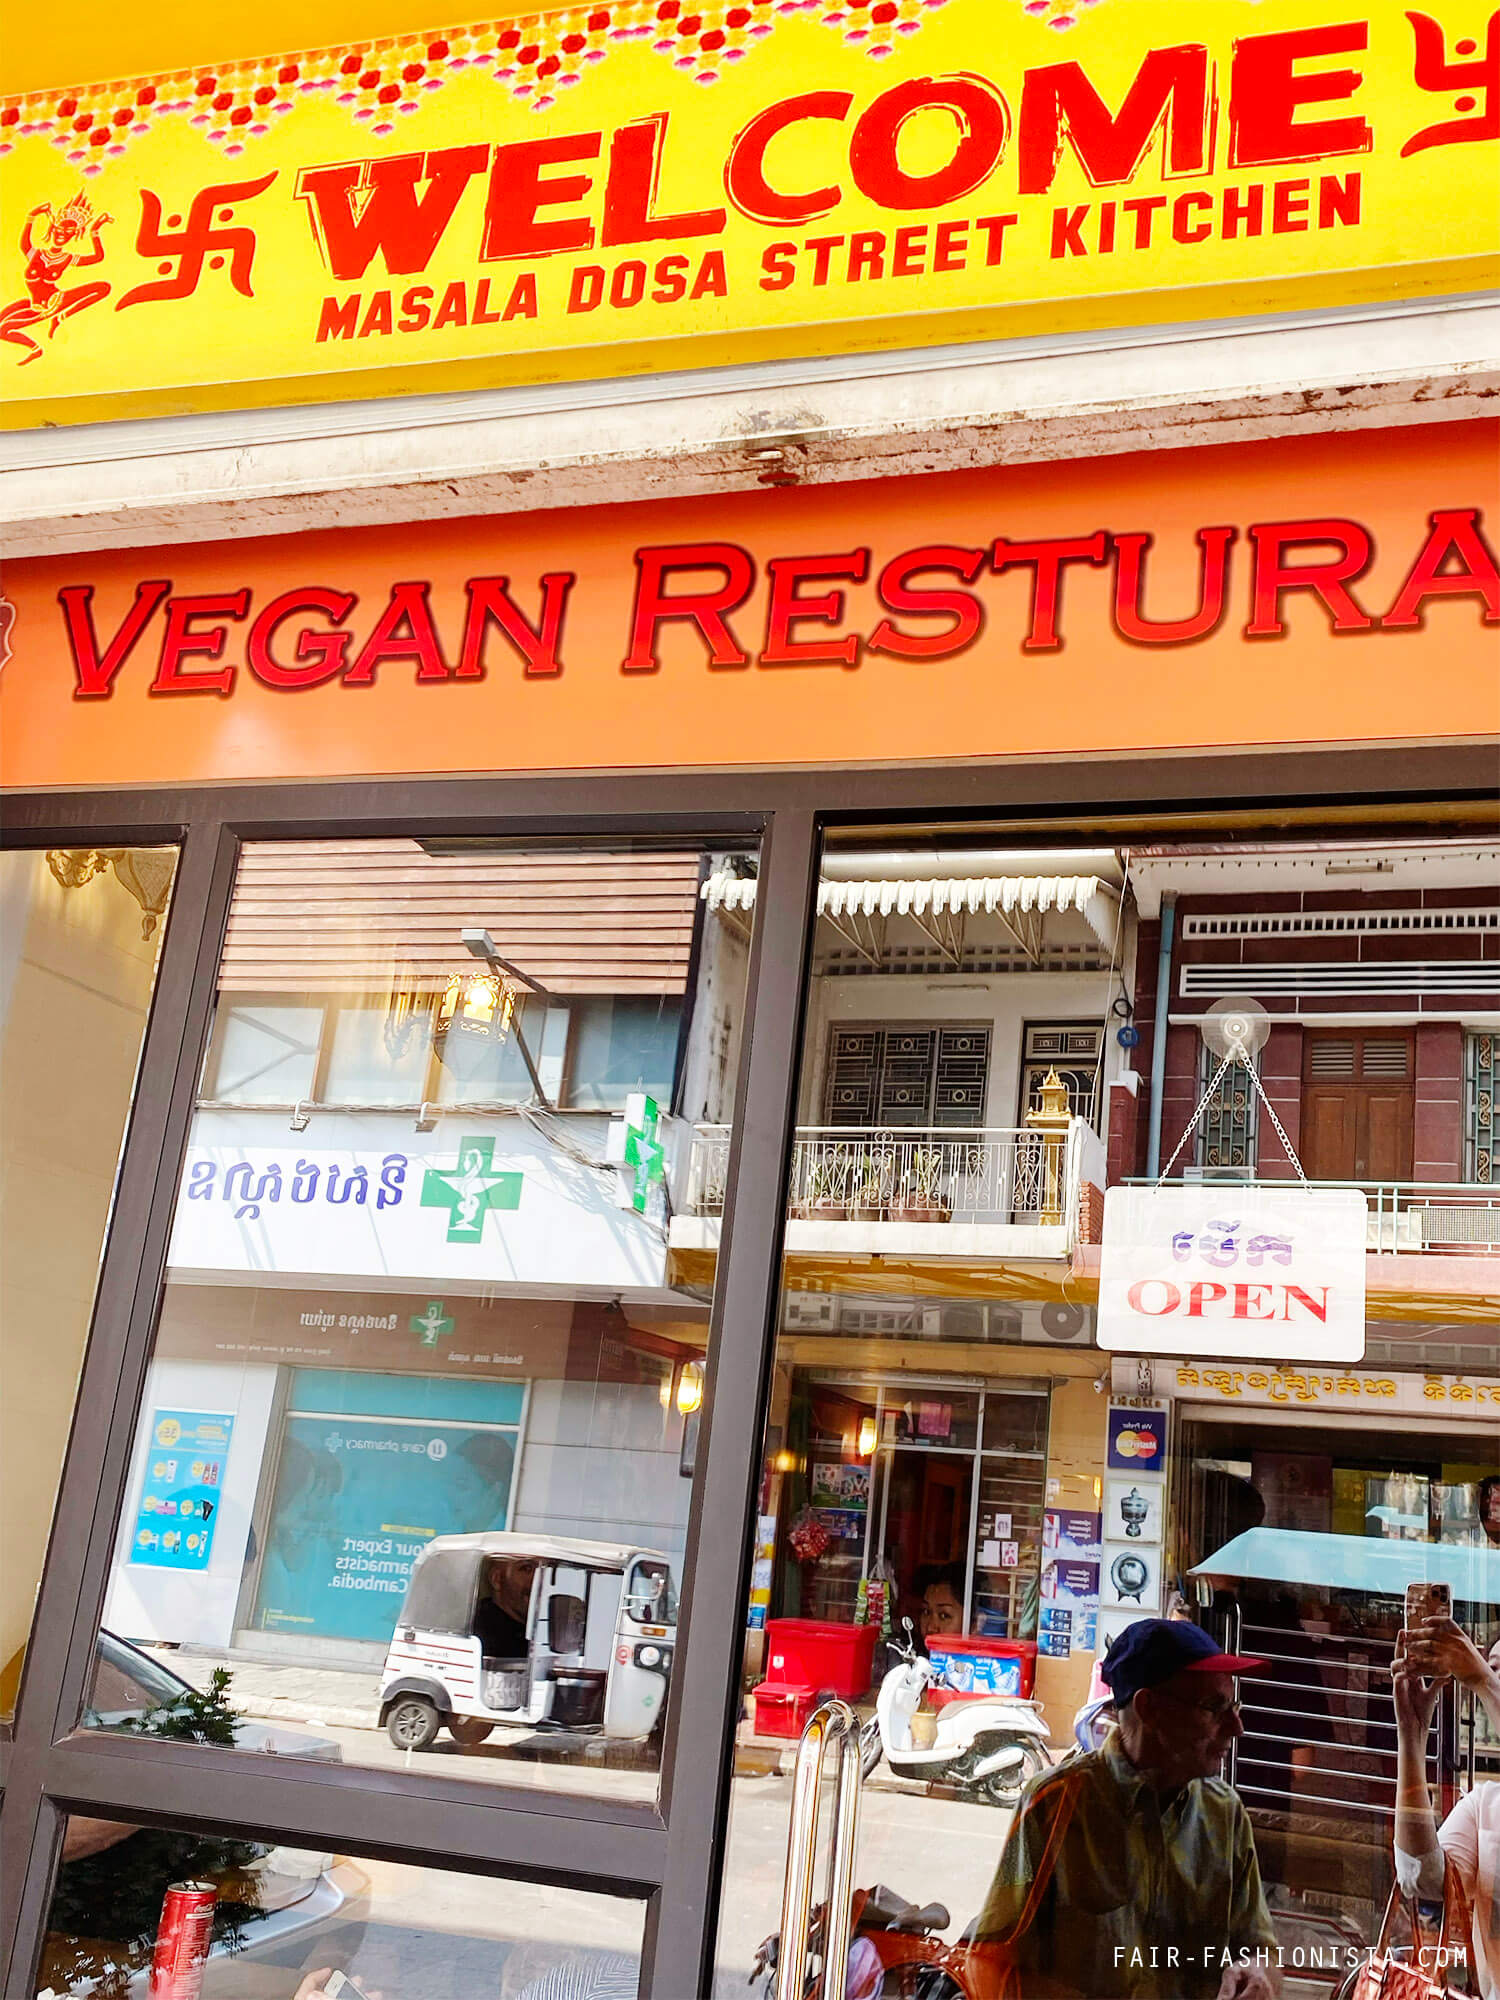 Masala Dosa Street Kitchen, Indian vegan restaurant in Phnom Penh